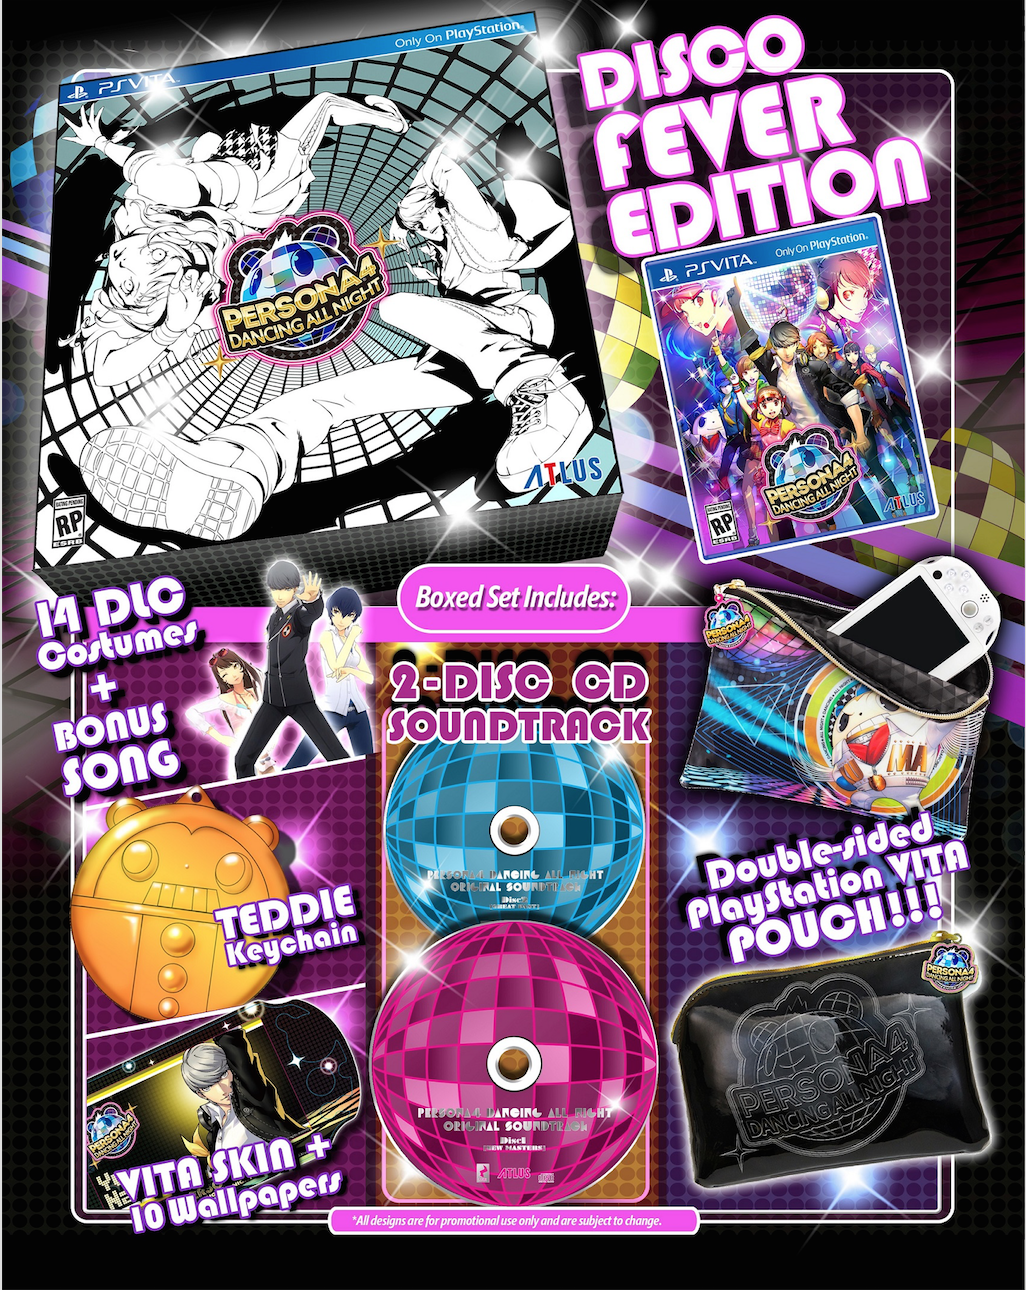 Persona 4: Dancing All Night Disco Fever Special Edition (PSVita), Atlus